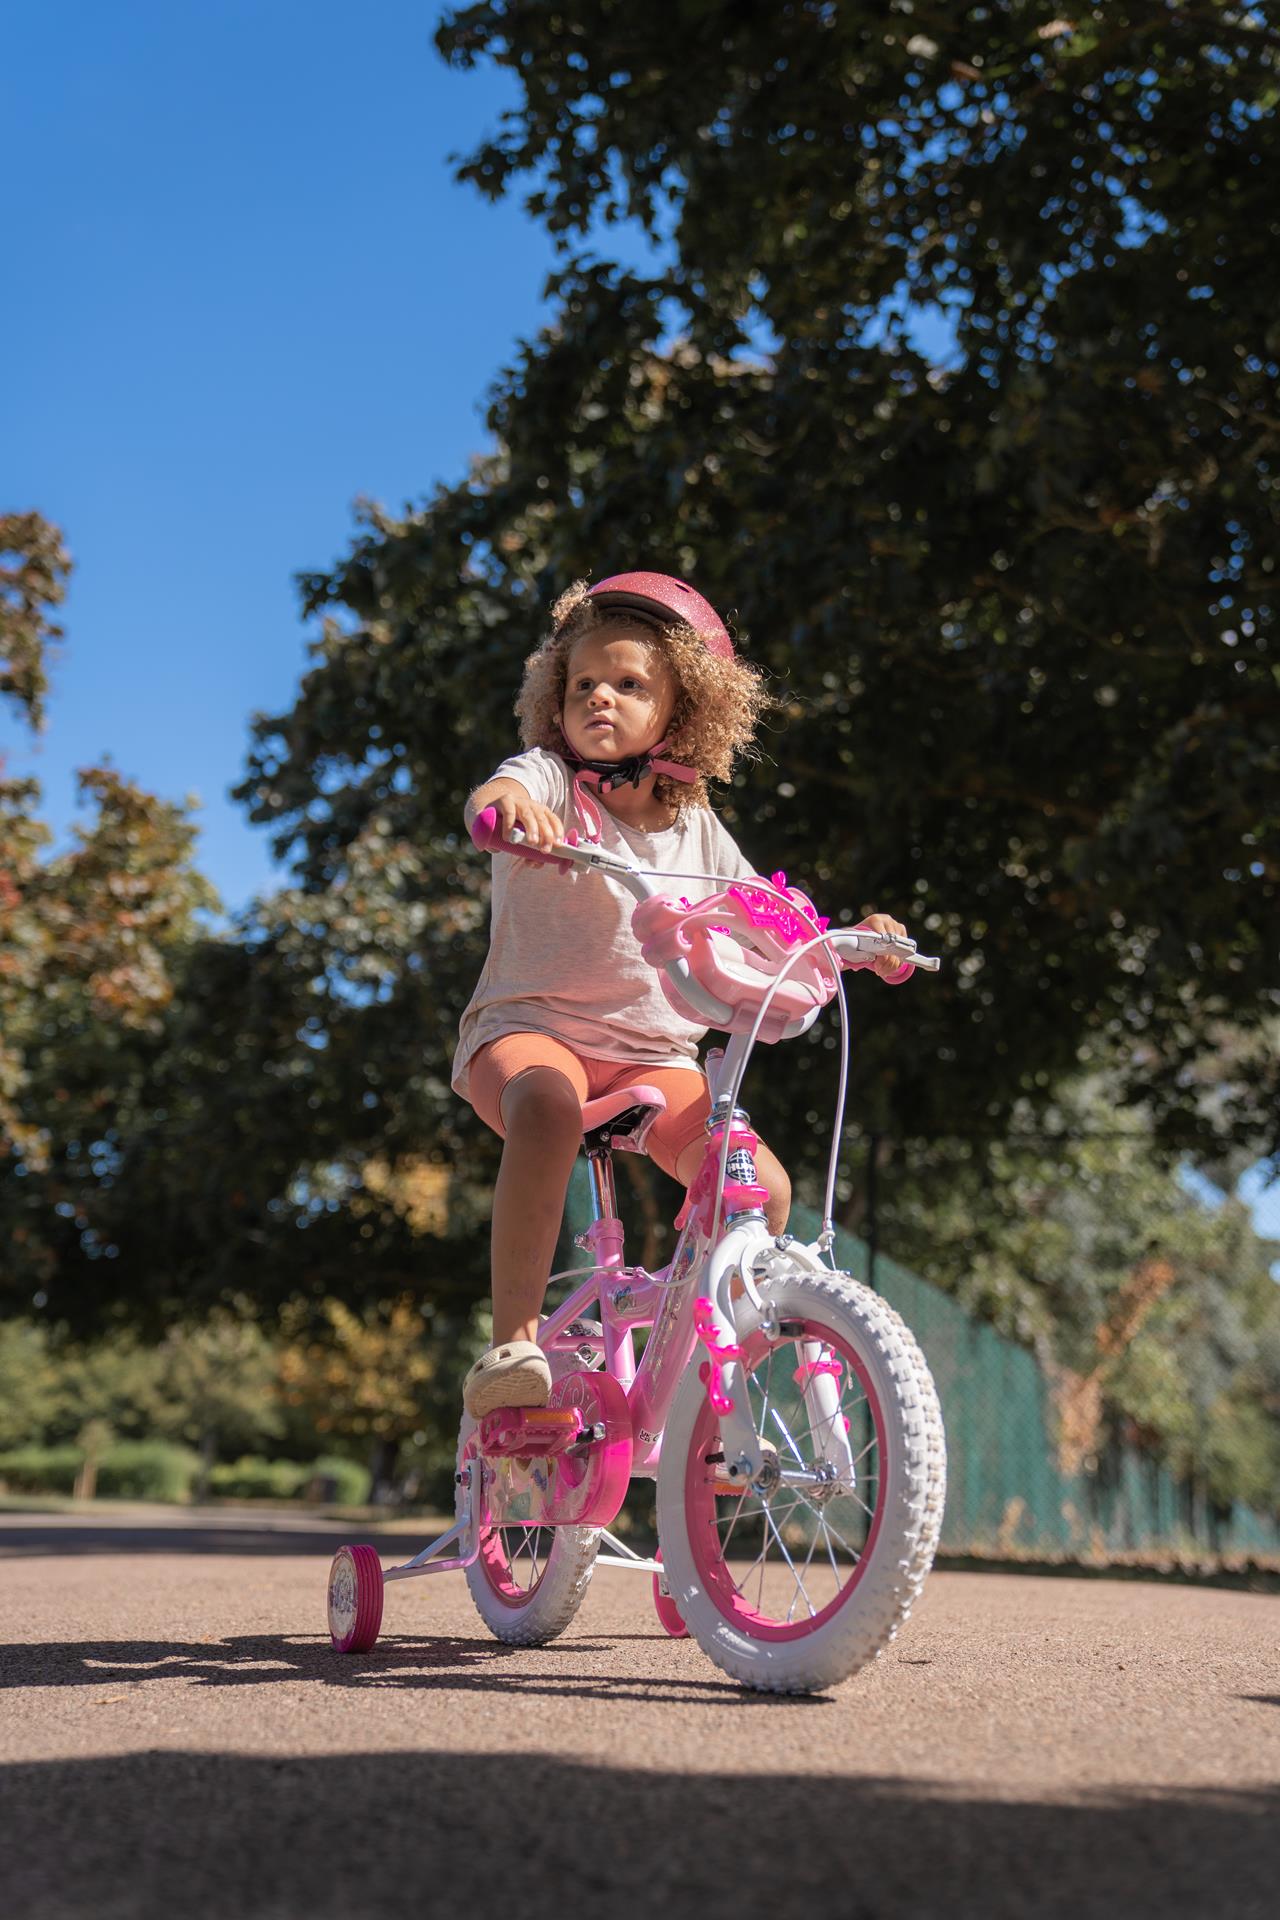 Huffy Princess 14" Детский велосипед